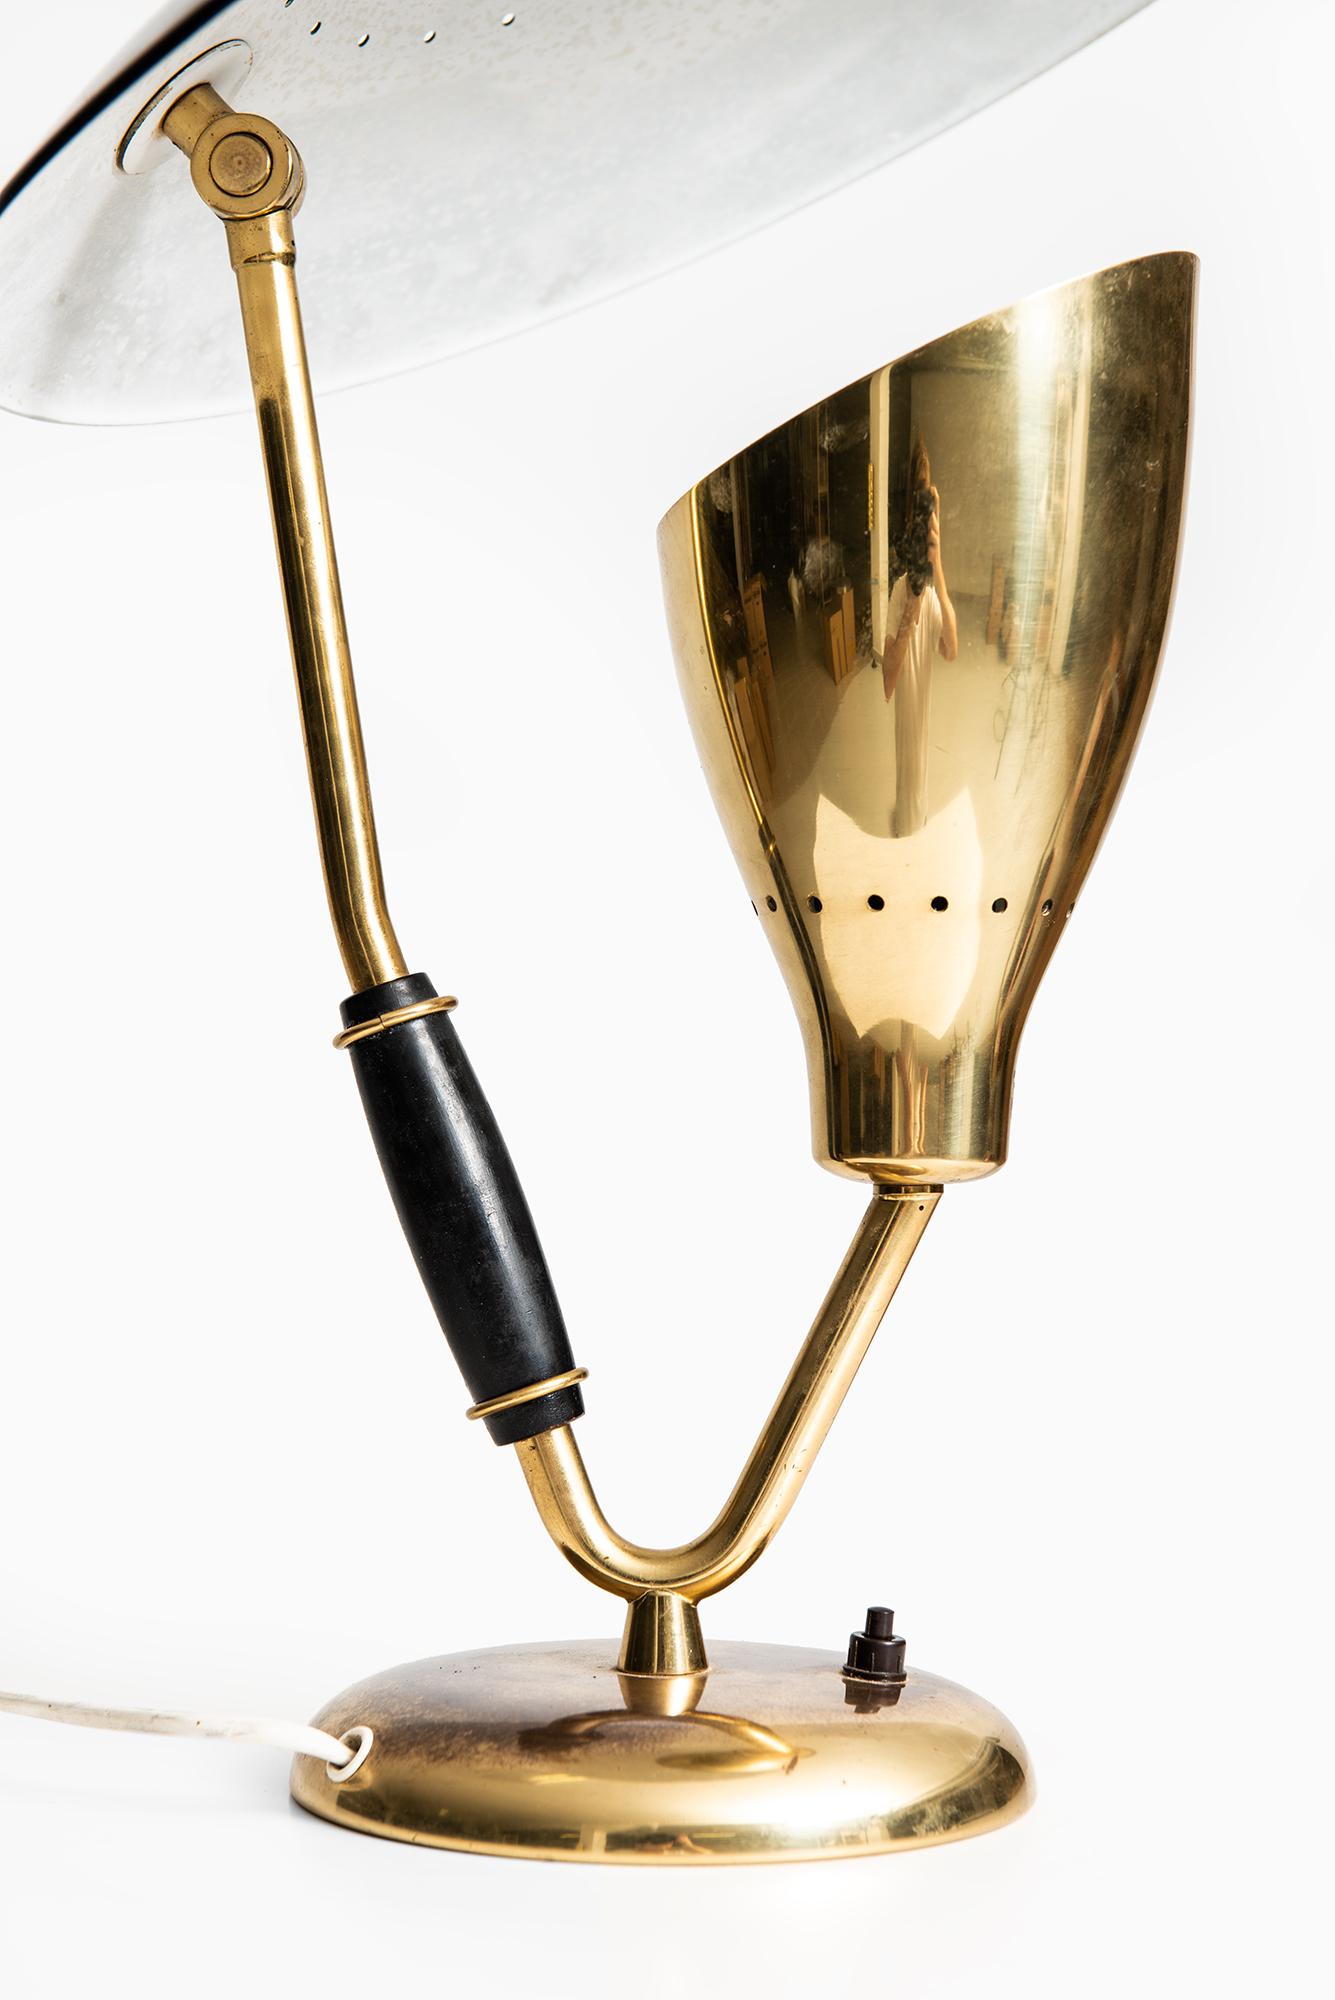 Rare table lamp designed by Svend Aage Holm Sørensen. Produced by Holm Sørensen & Co. in Denmark.